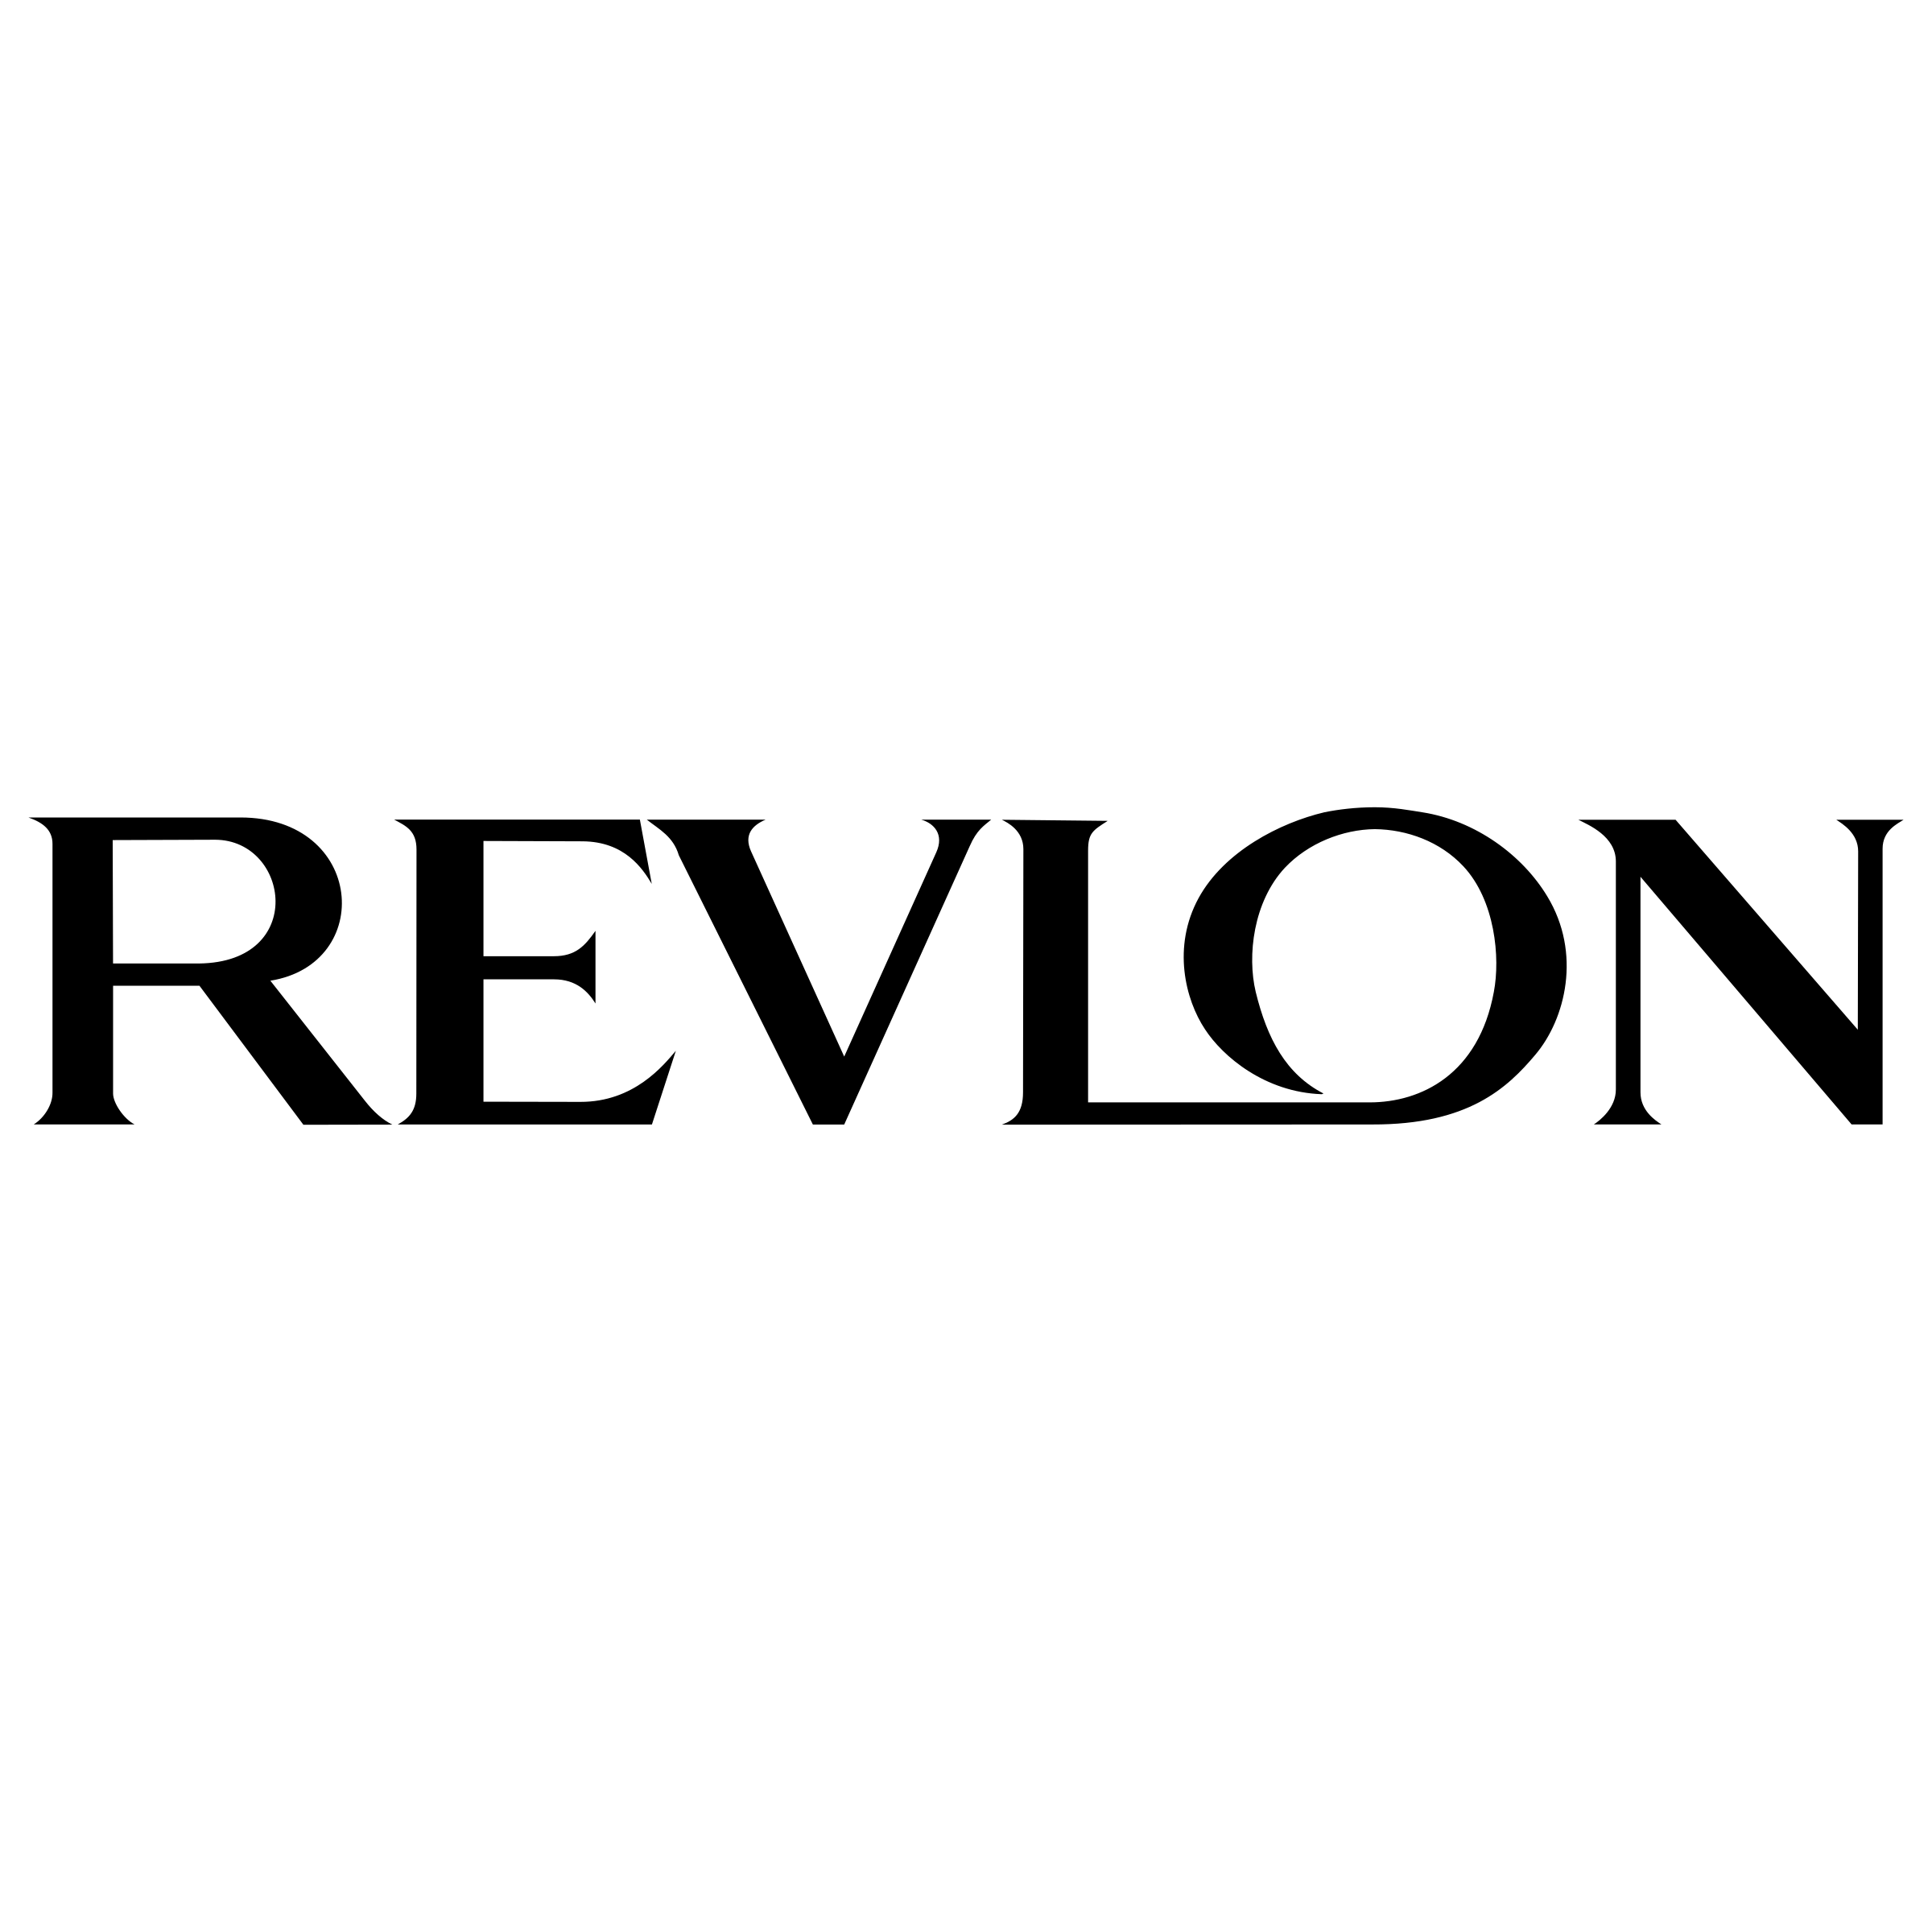 revlon-logo-png-transparent